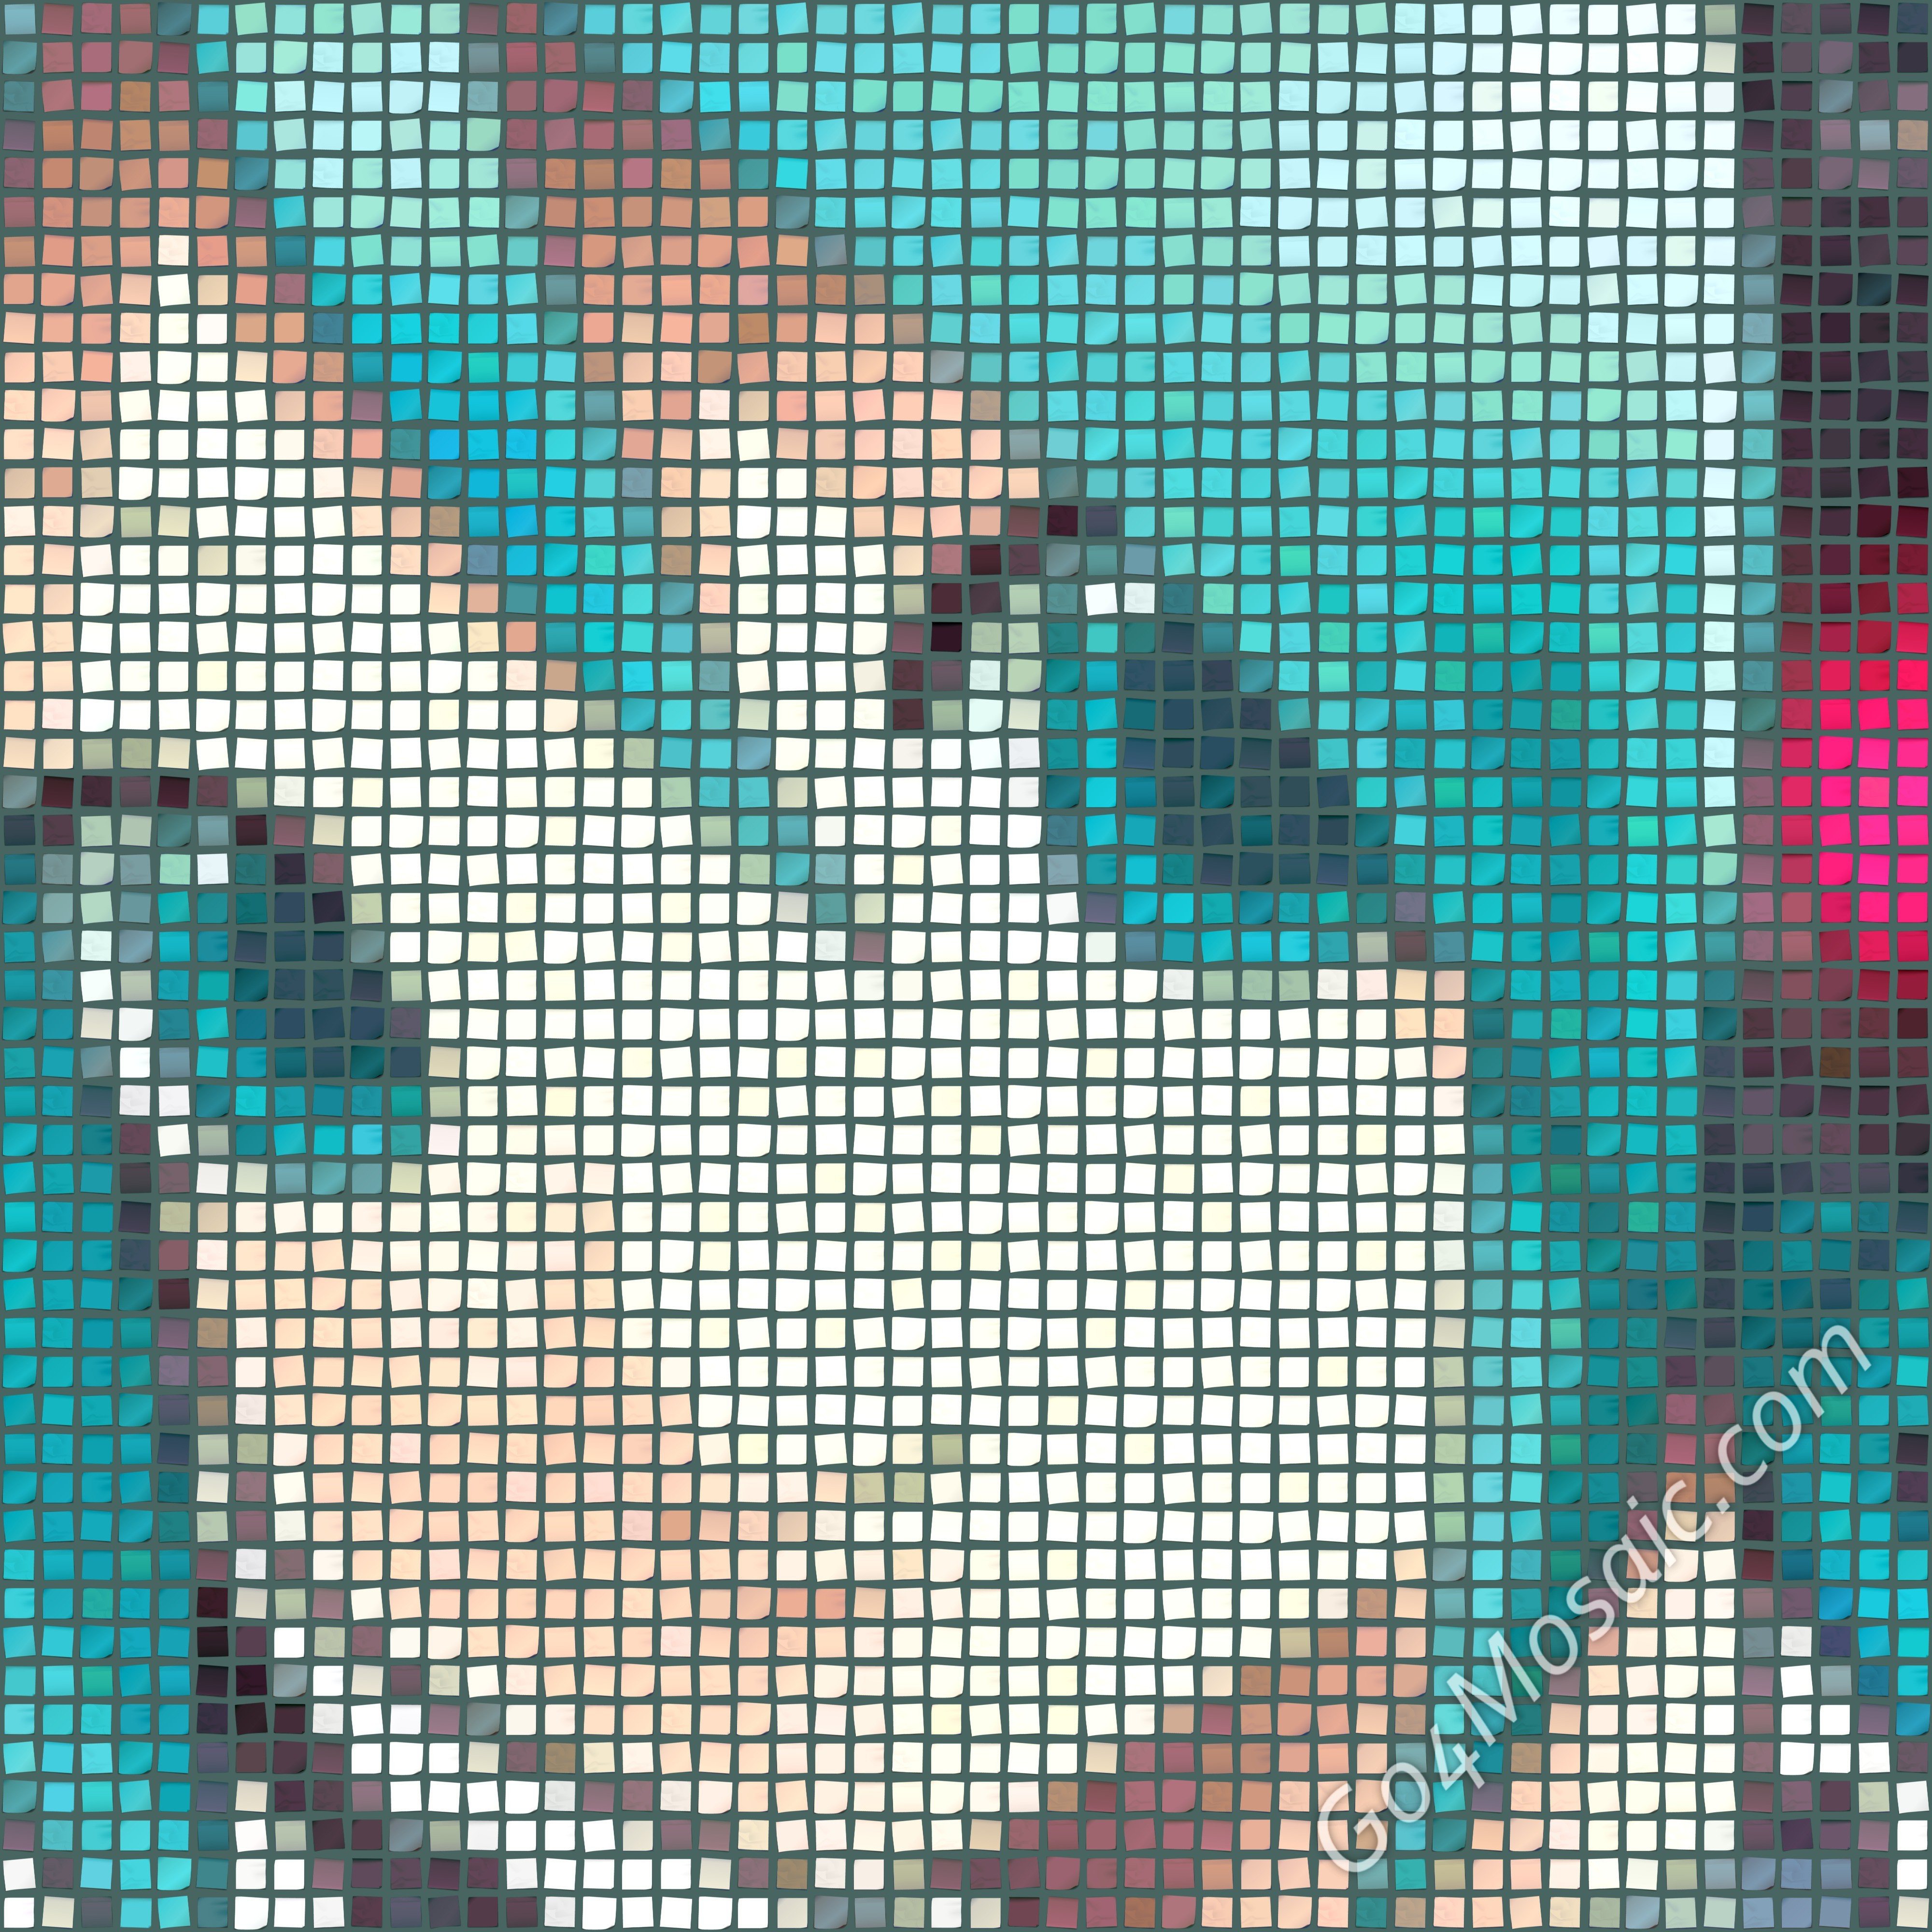 Hatsune Miku mosaic from Postits Go4mosaic Blog